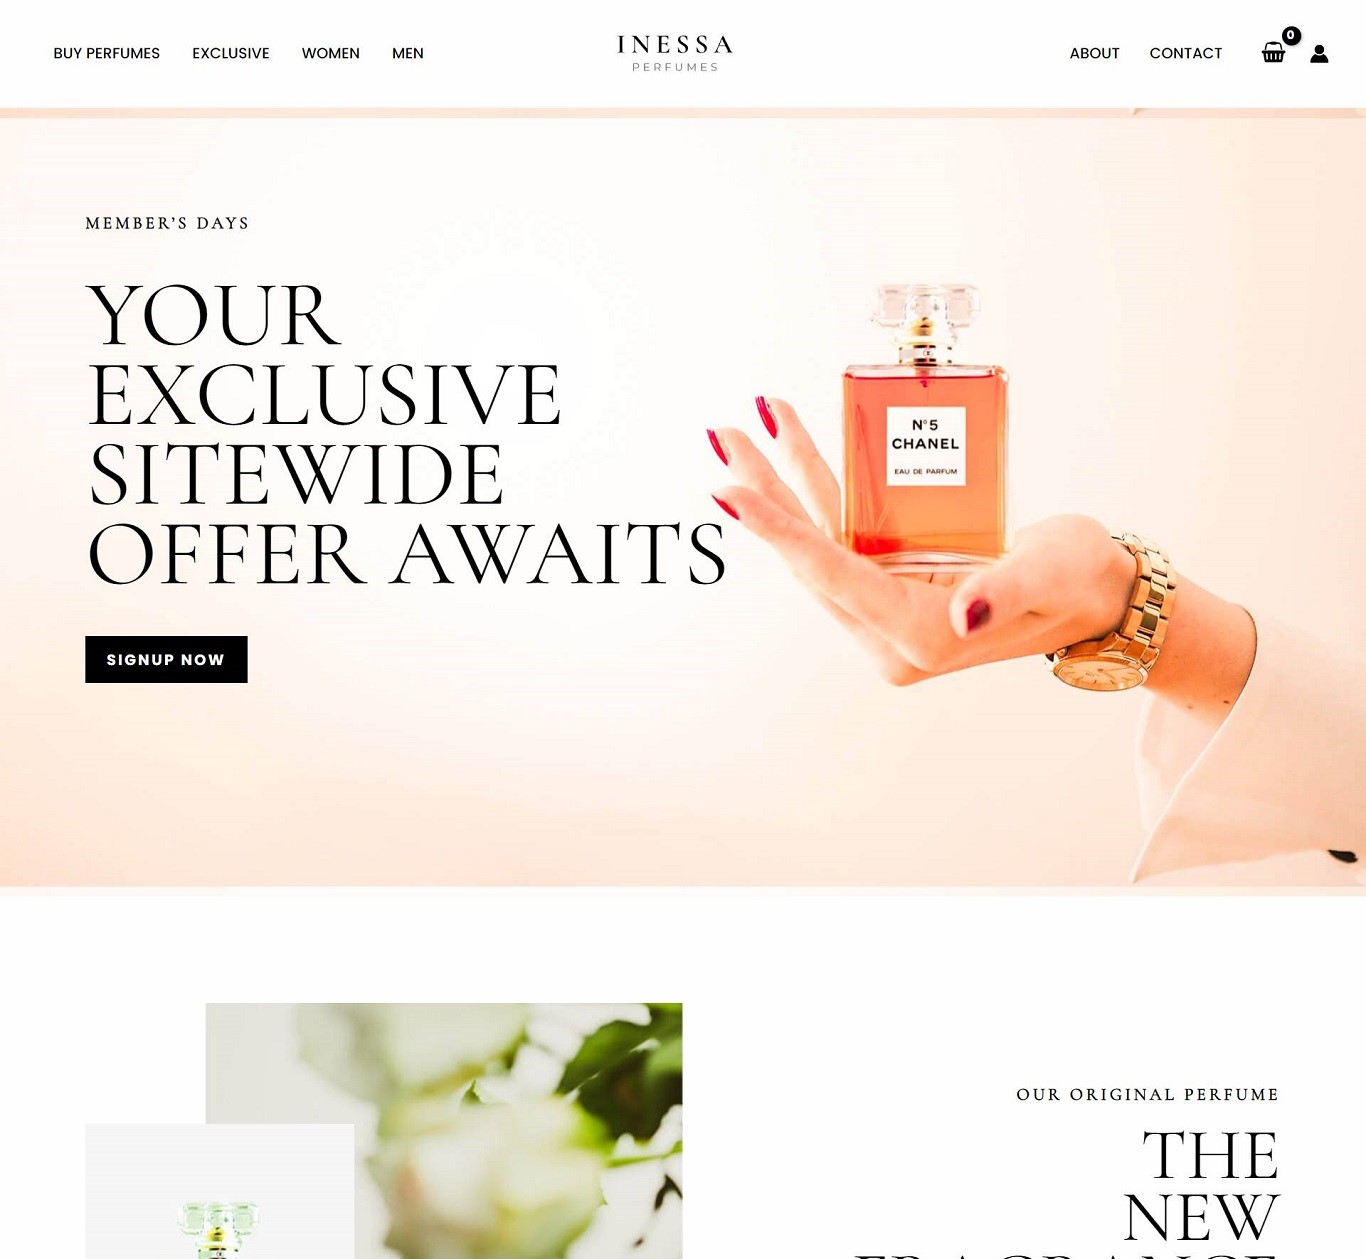 inessa-perfumes cloudi7 best website designer in usa